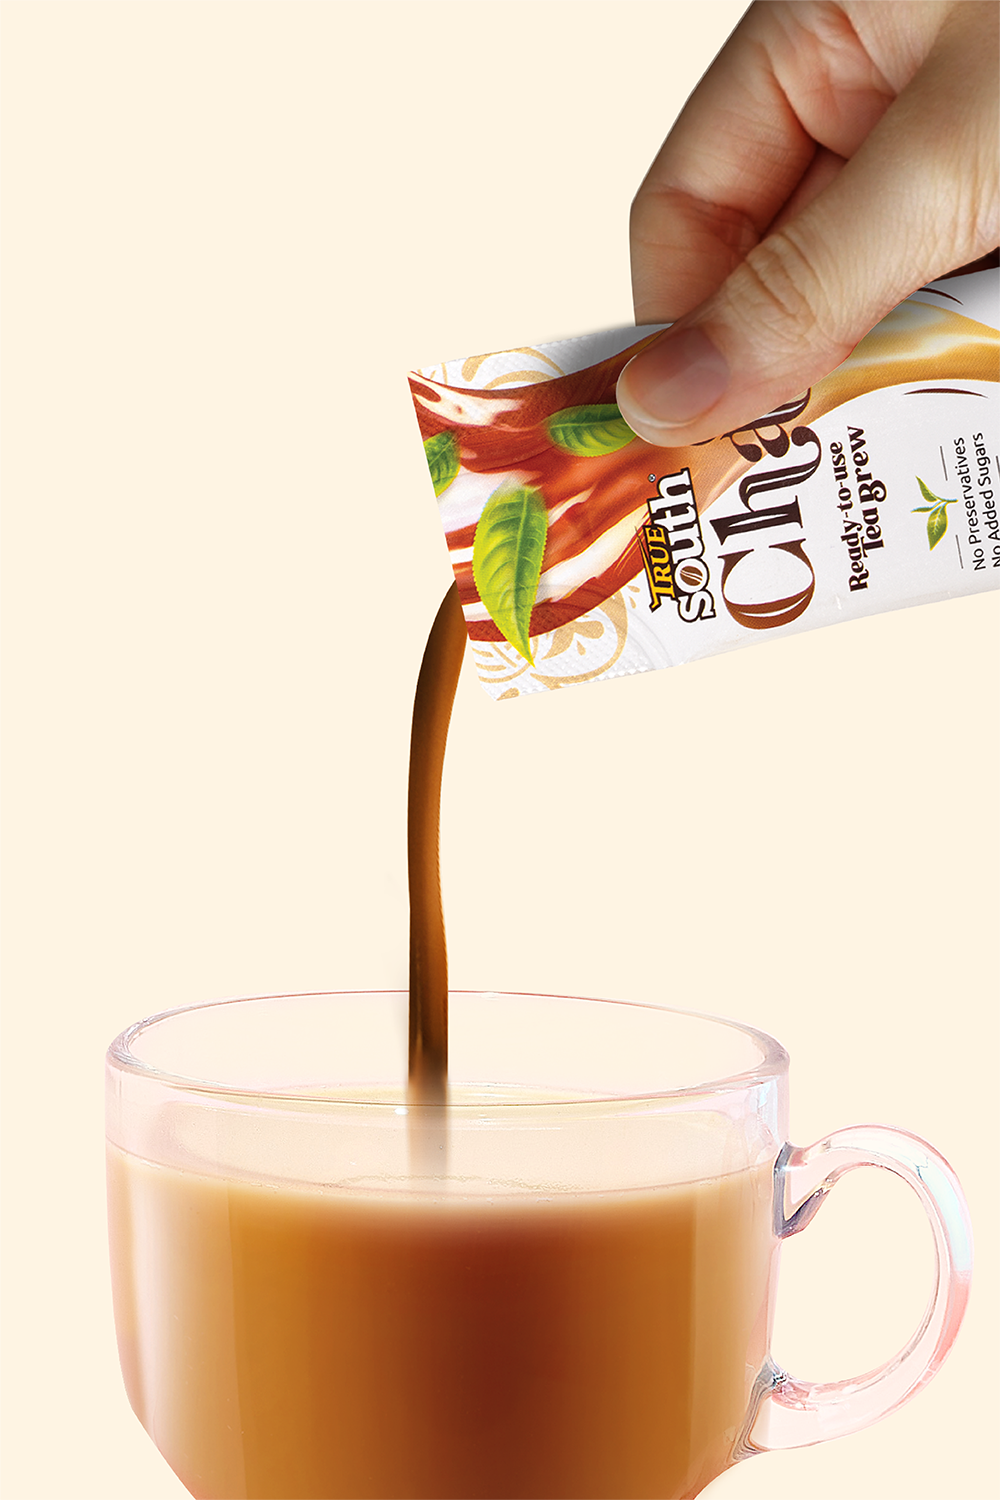 MASALA Ready-to-use Tea Brew Subscription